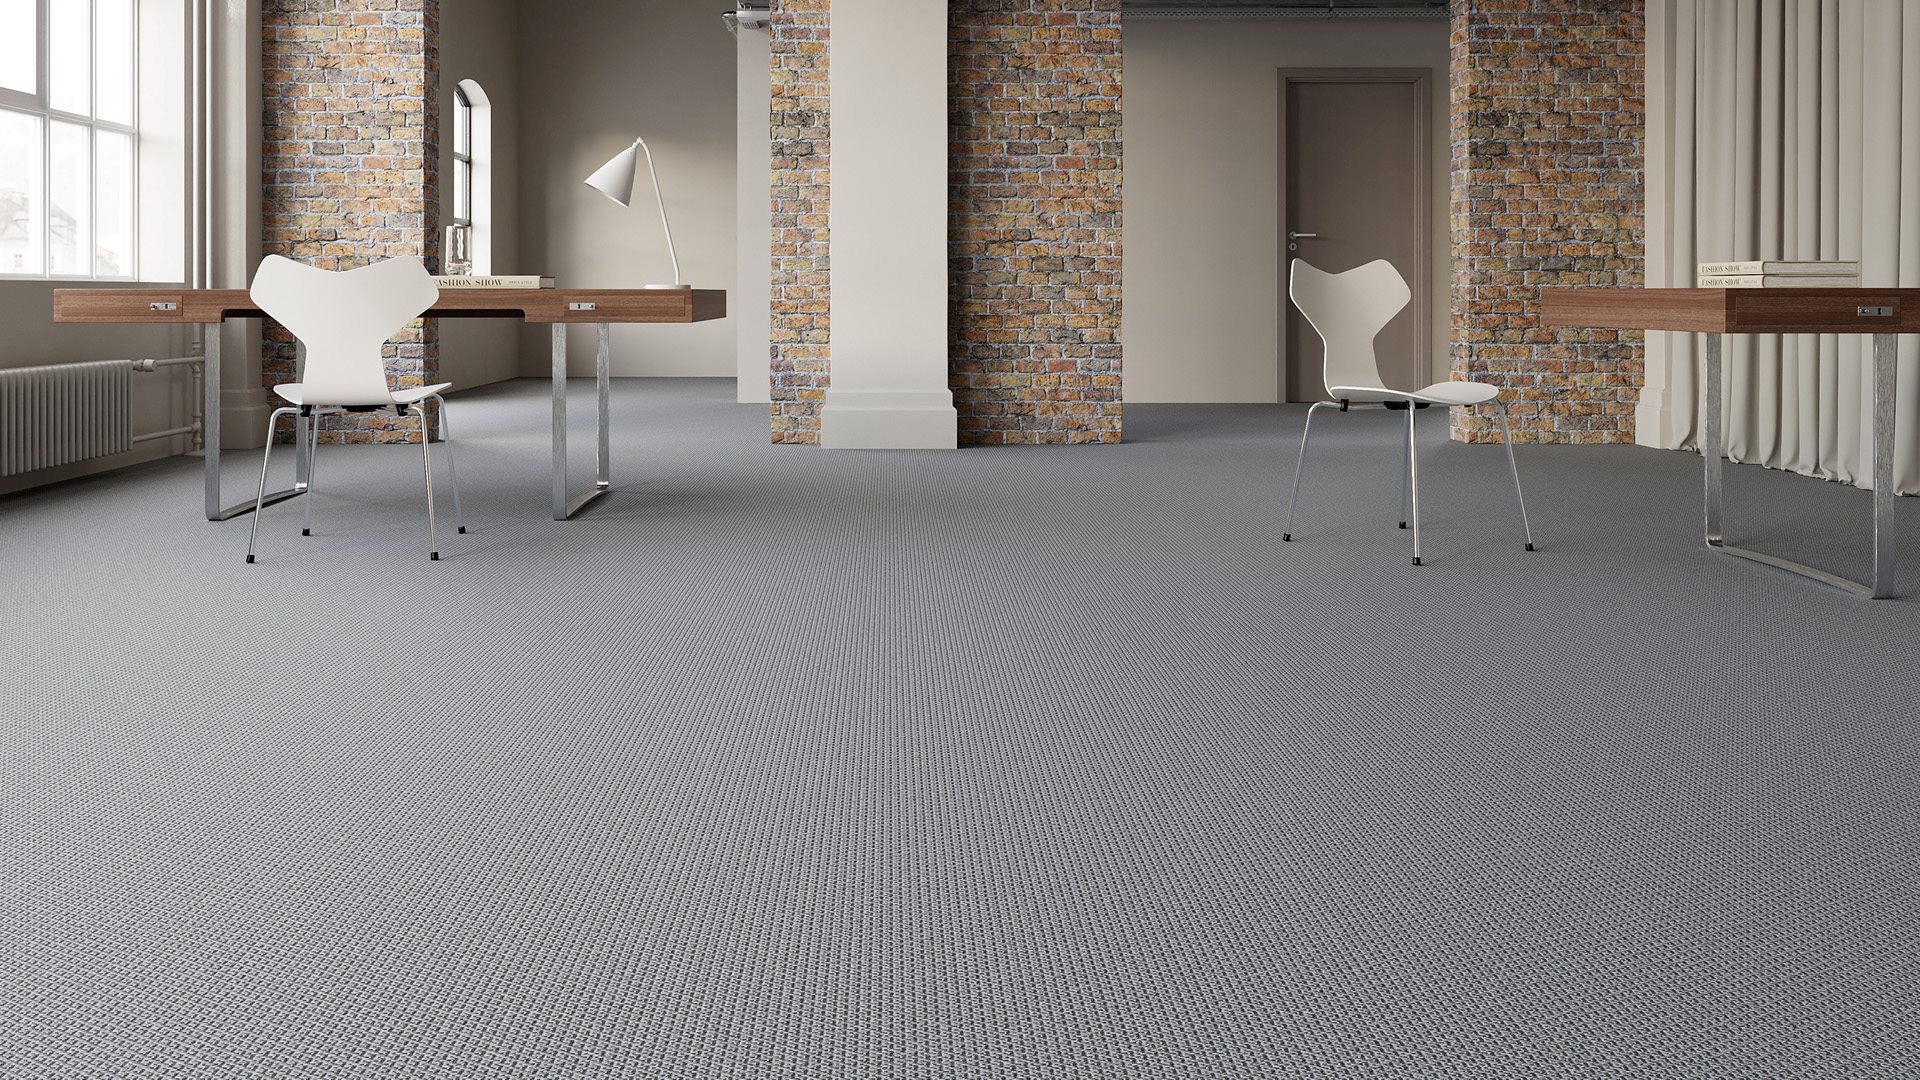 is Ryg, ryg, ryg del indbildskhed Fletco Carpets A/S - Flexibility, creativity and sustainability